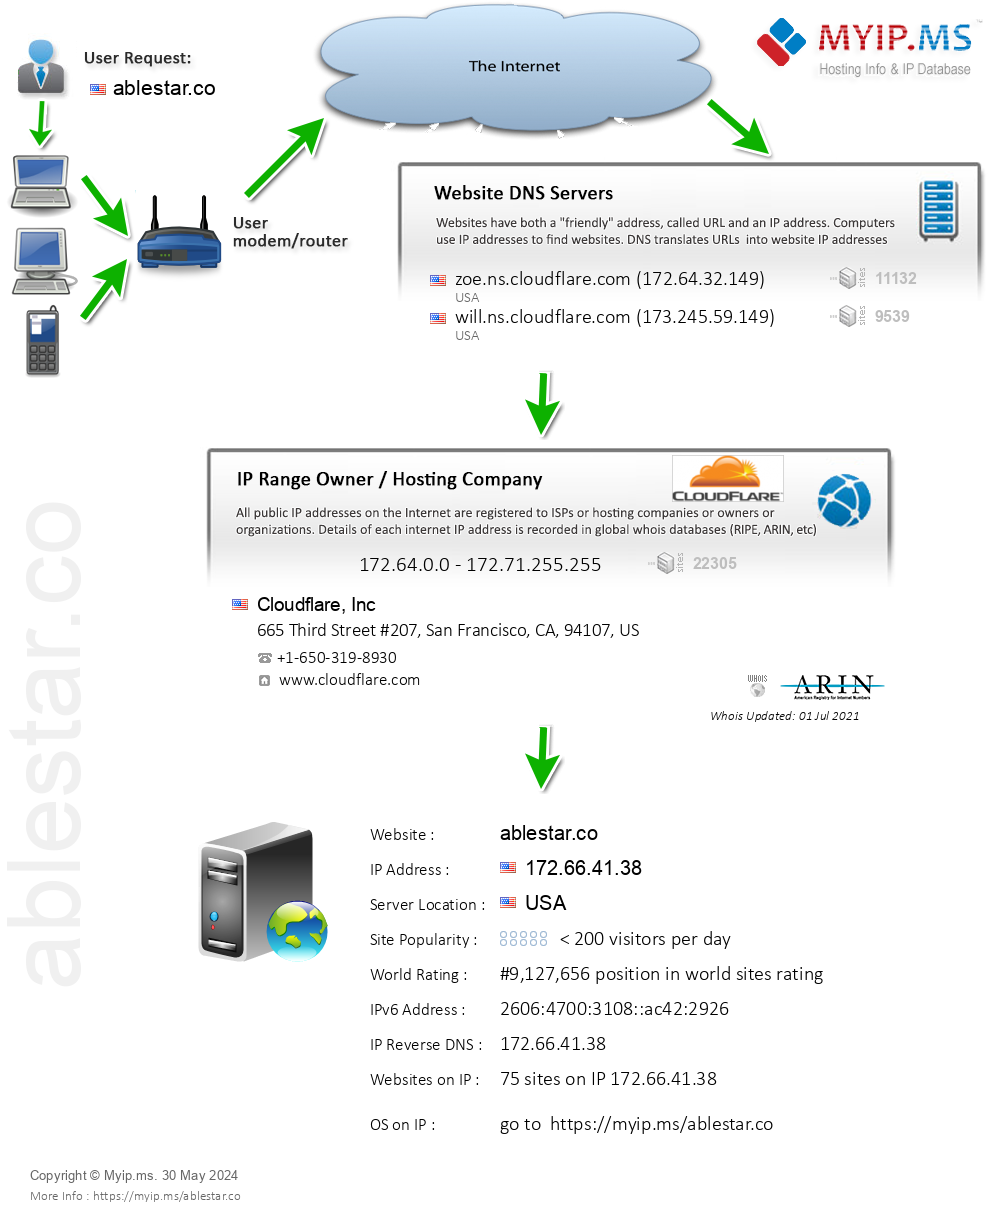 Ablestar.co - Website Hosting Visual IP Diagram